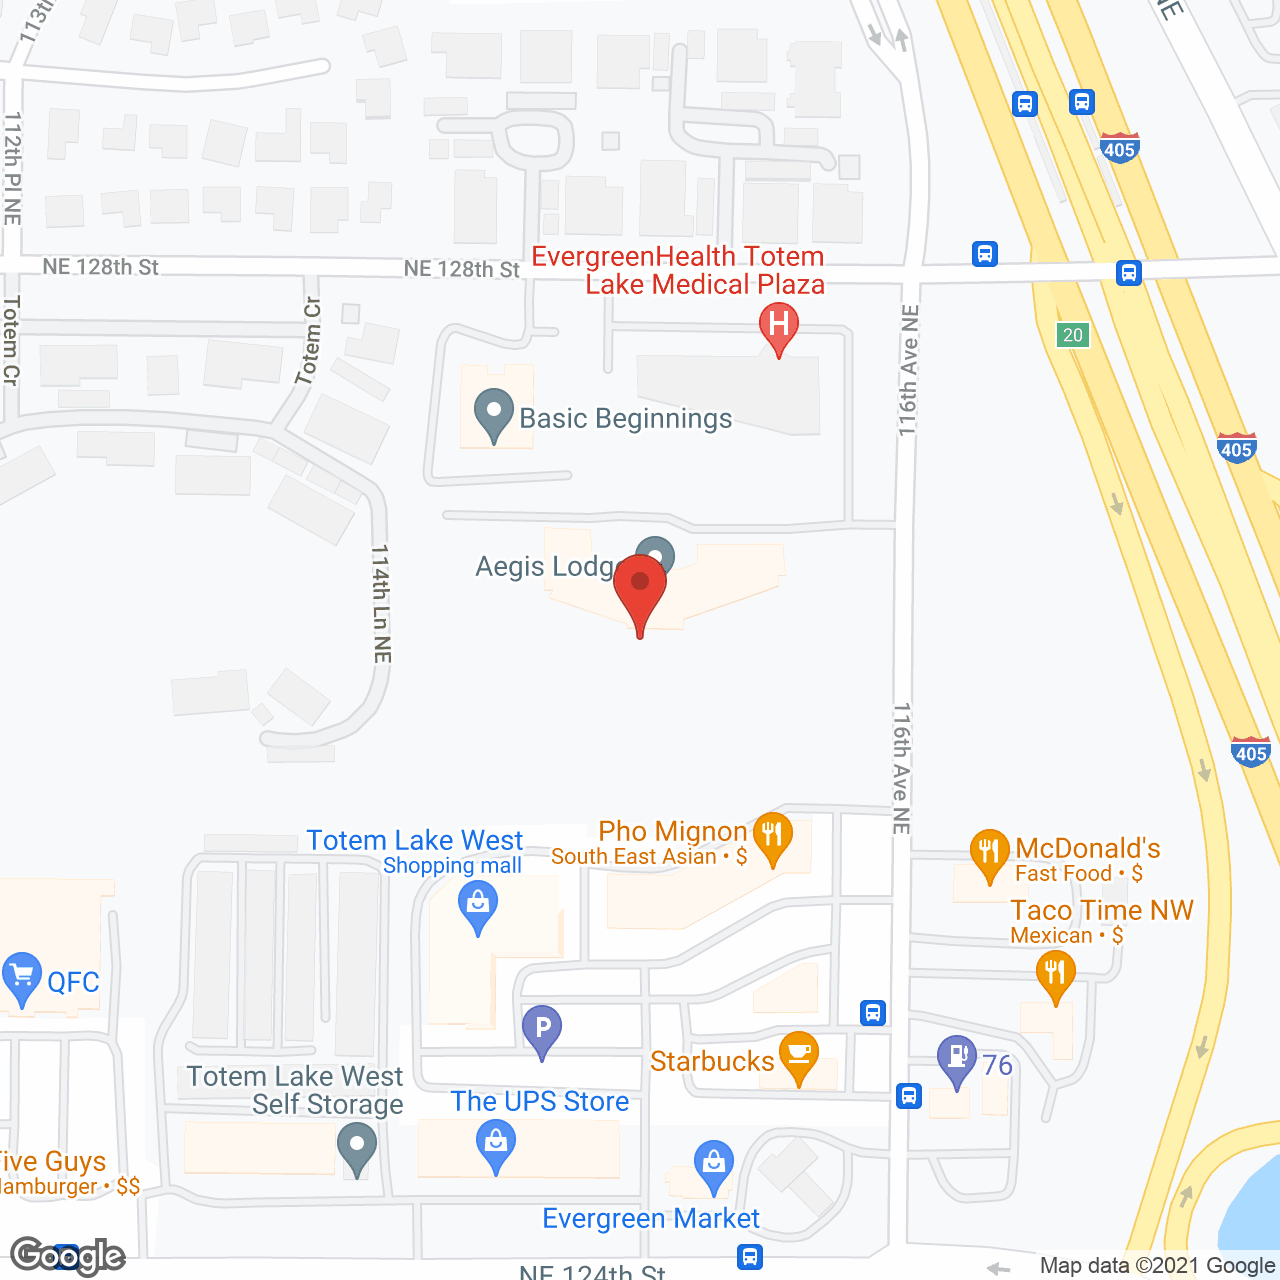 Aegis Lodge in google map